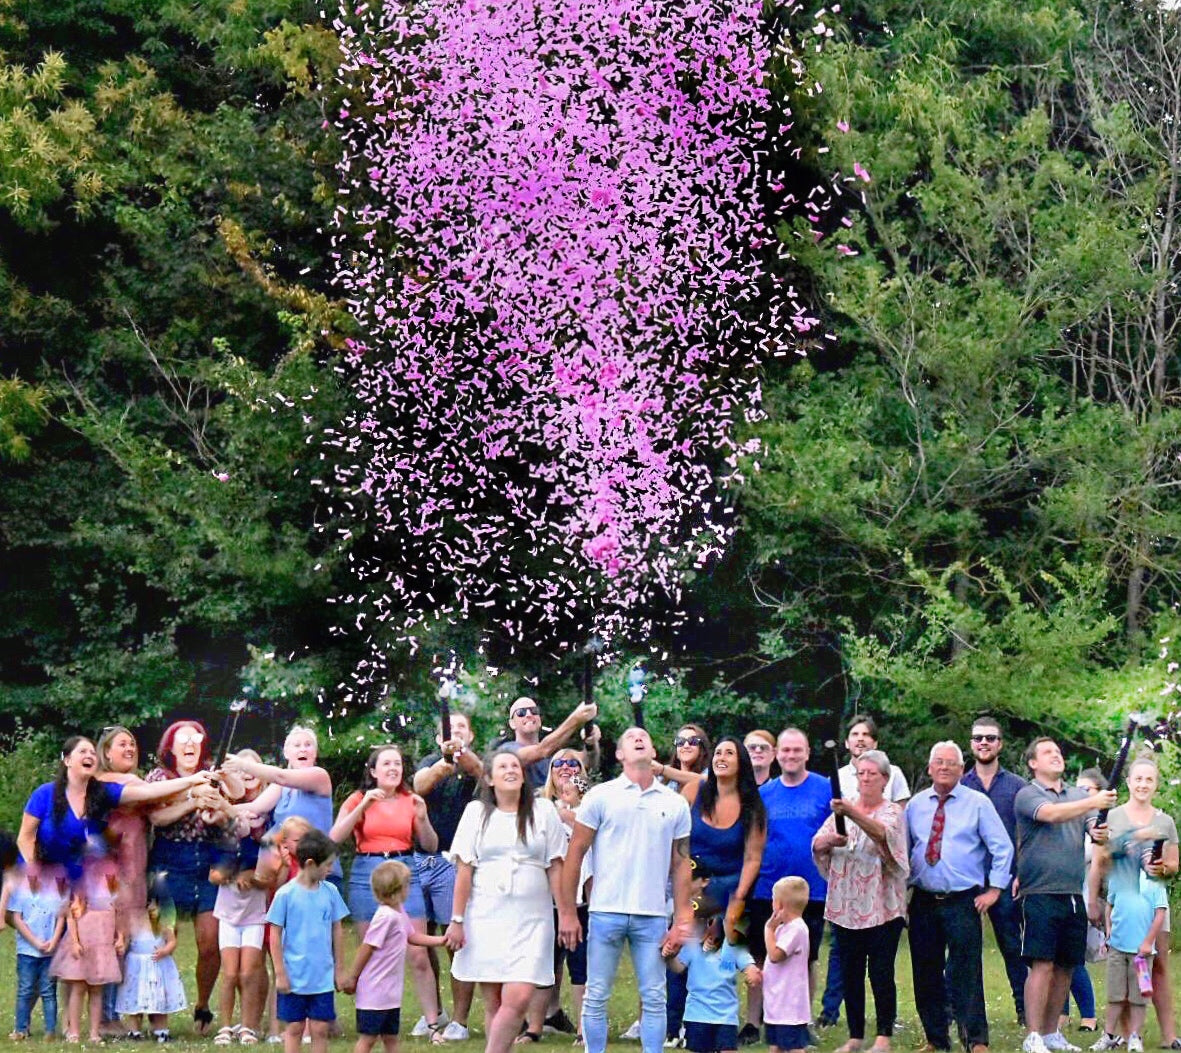 Pink gender reveal cannon let off over crowd